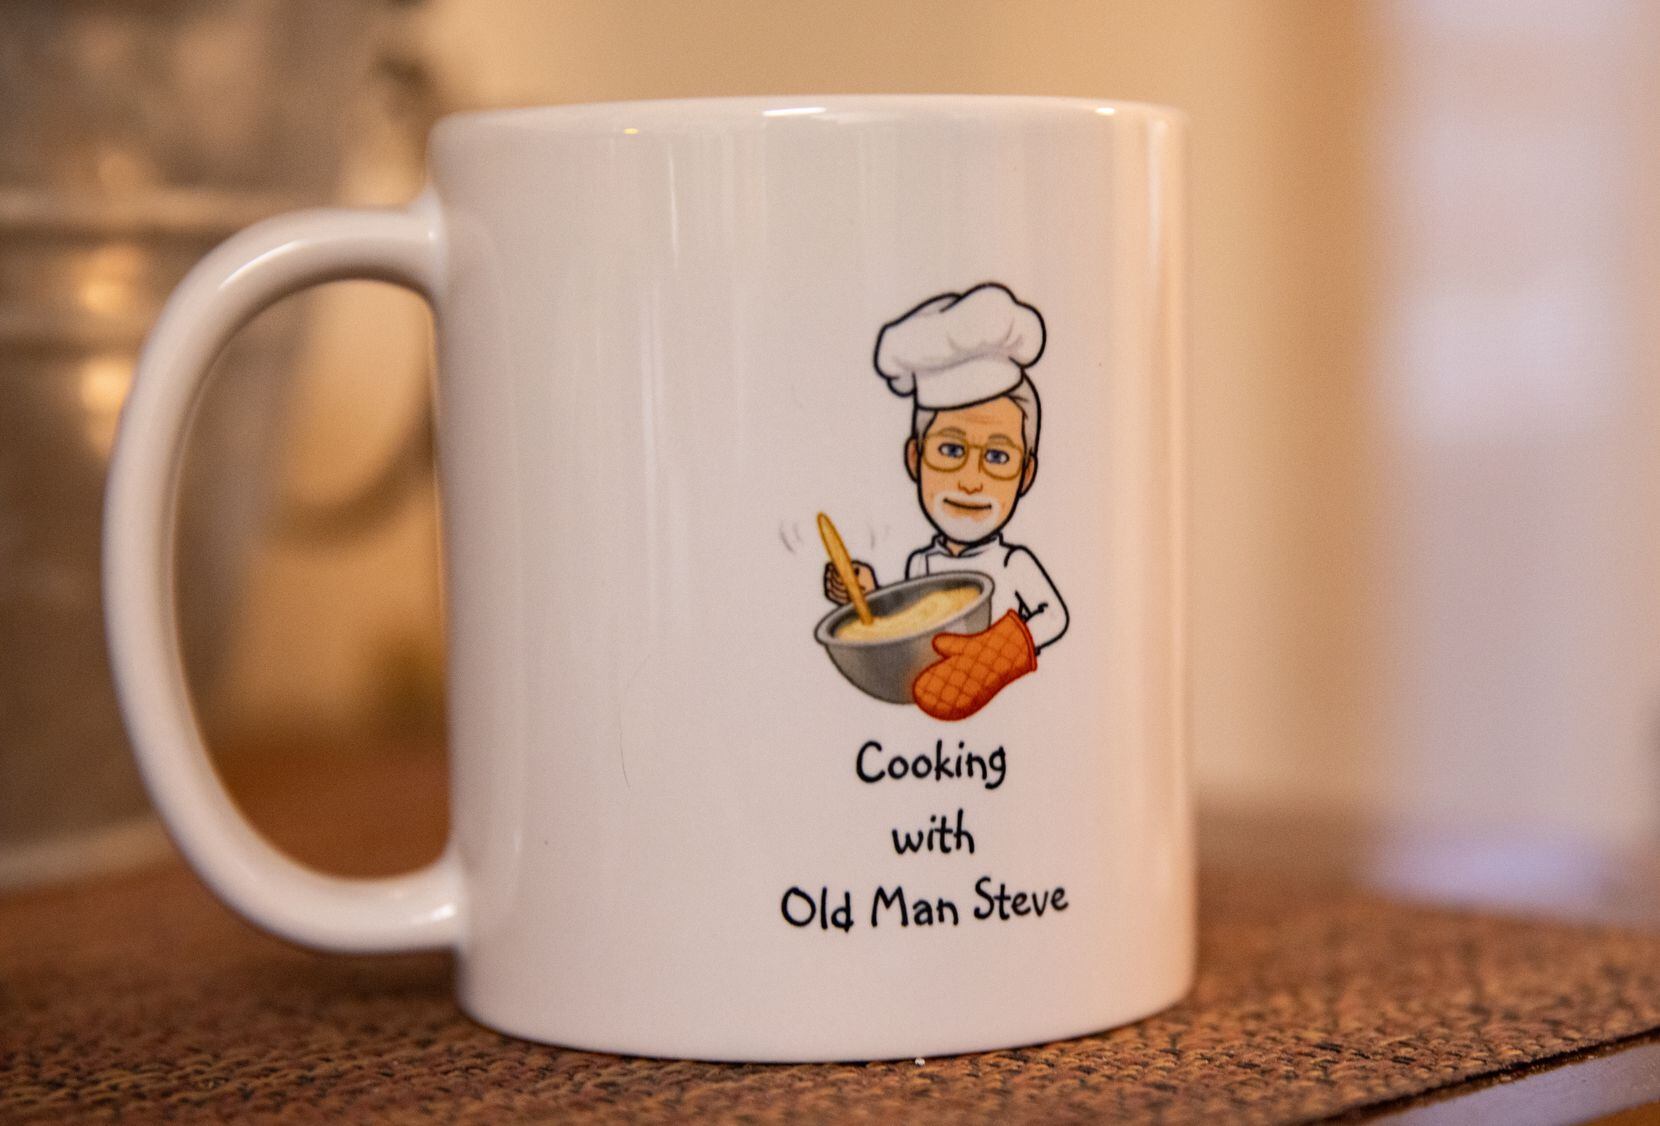 This coffee mug features Steve Austin, a.k.a. Old Man Steve.